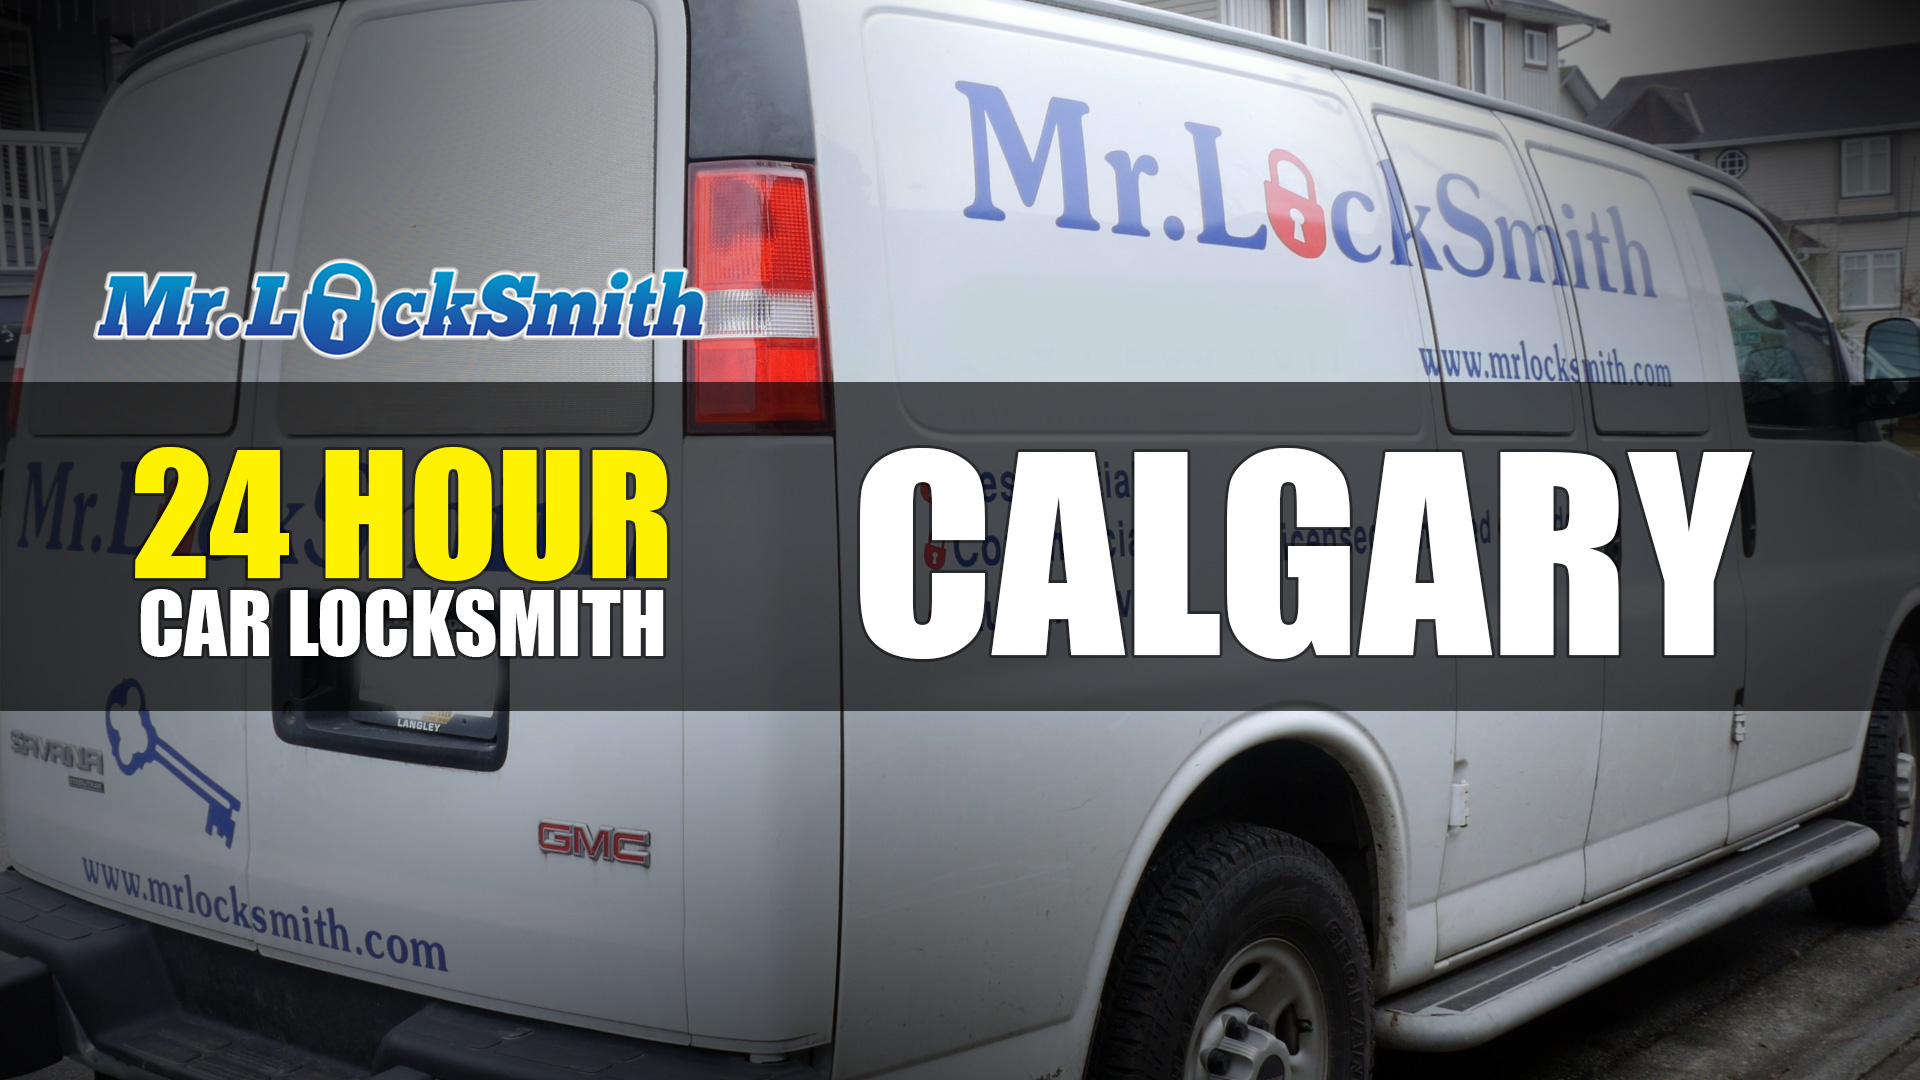 24 Hour Car Locksmith CALGARY  Mr Locksmith Calgary